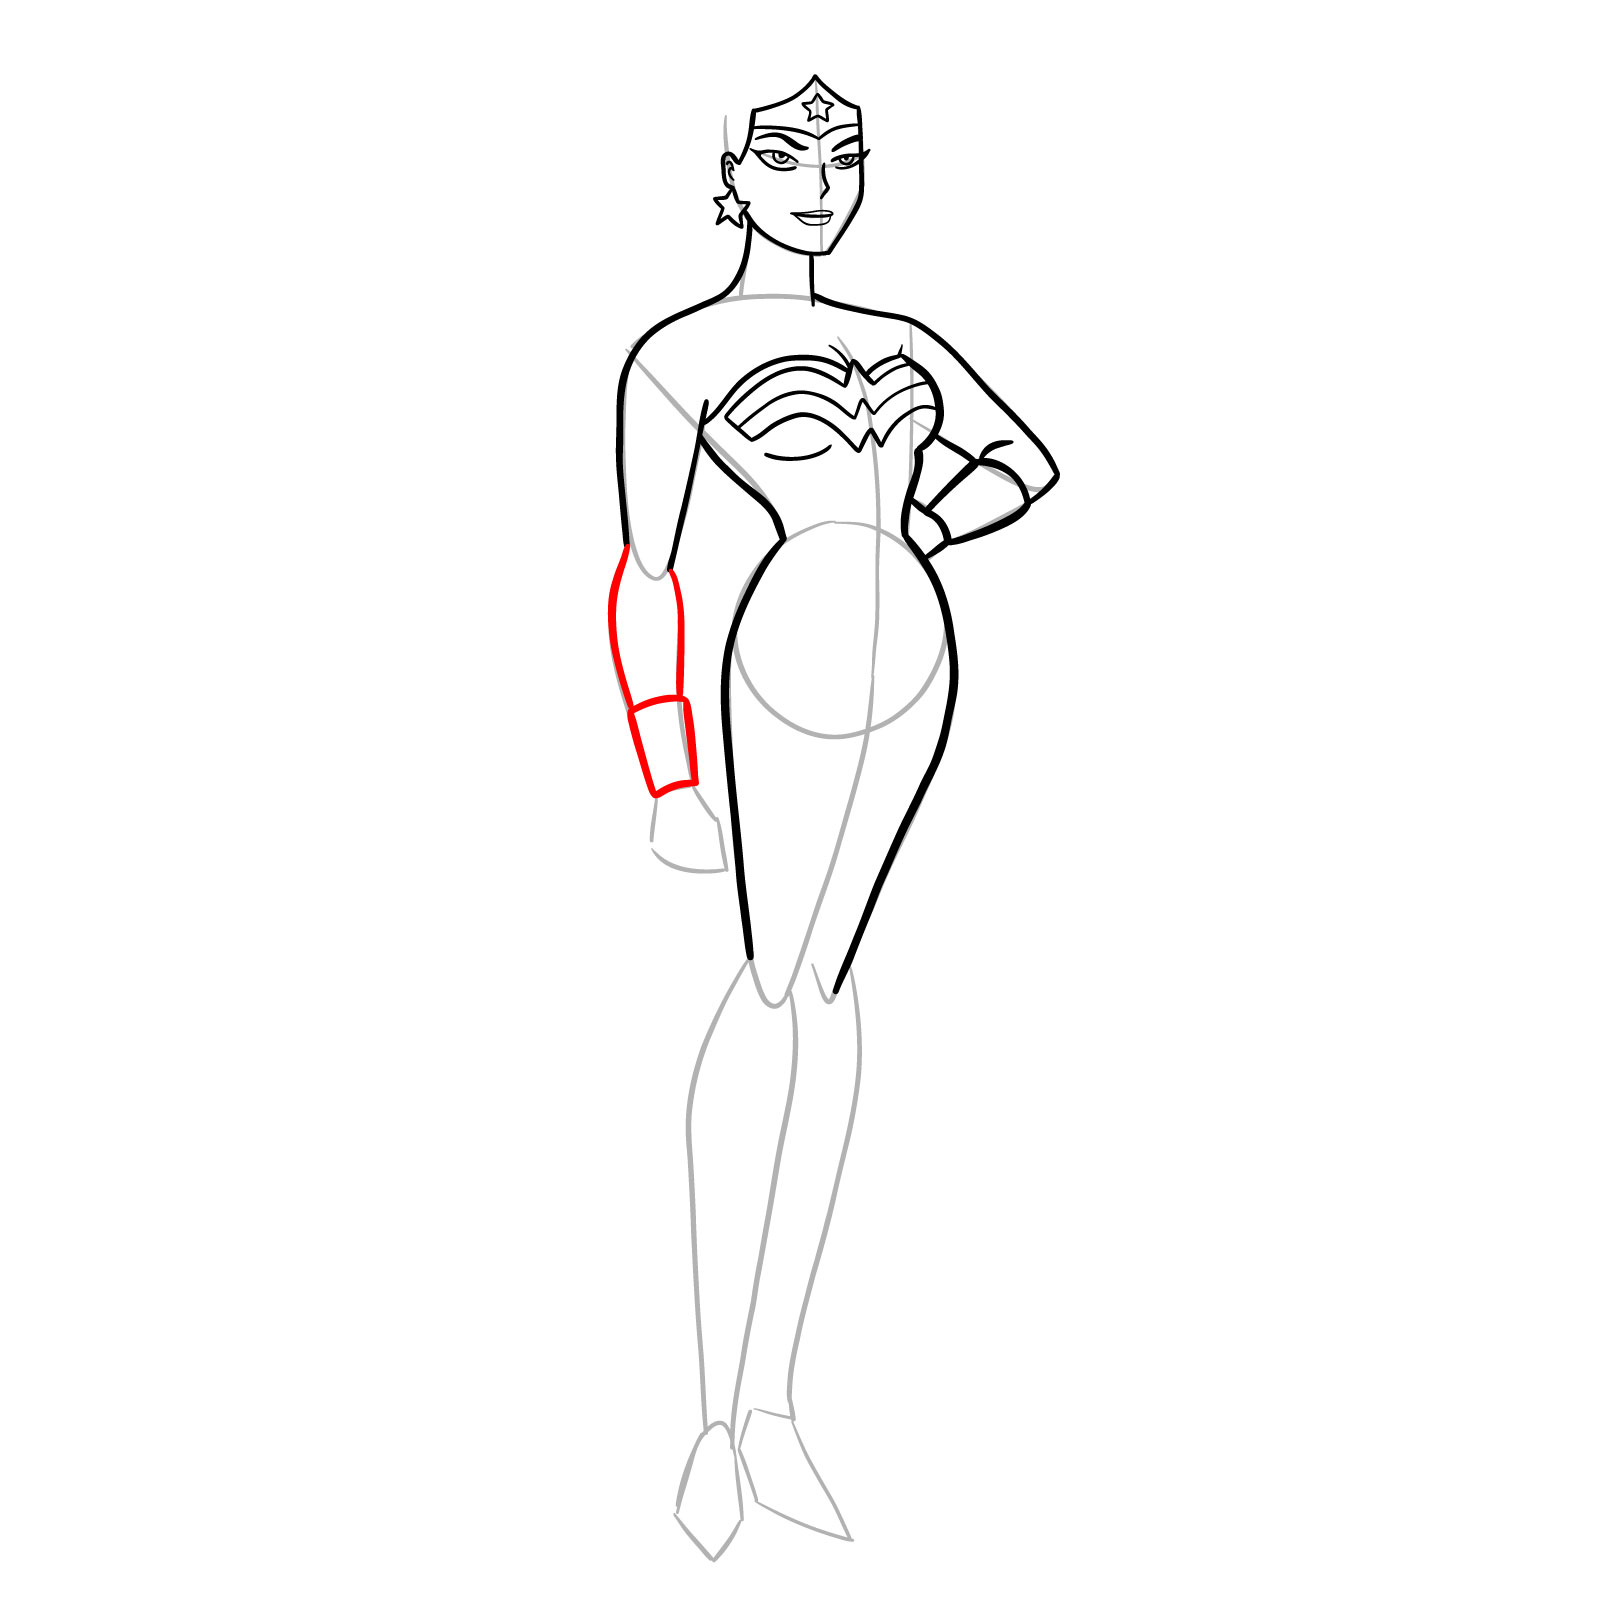 How to draw Wonder Woman cartoon style - step 19